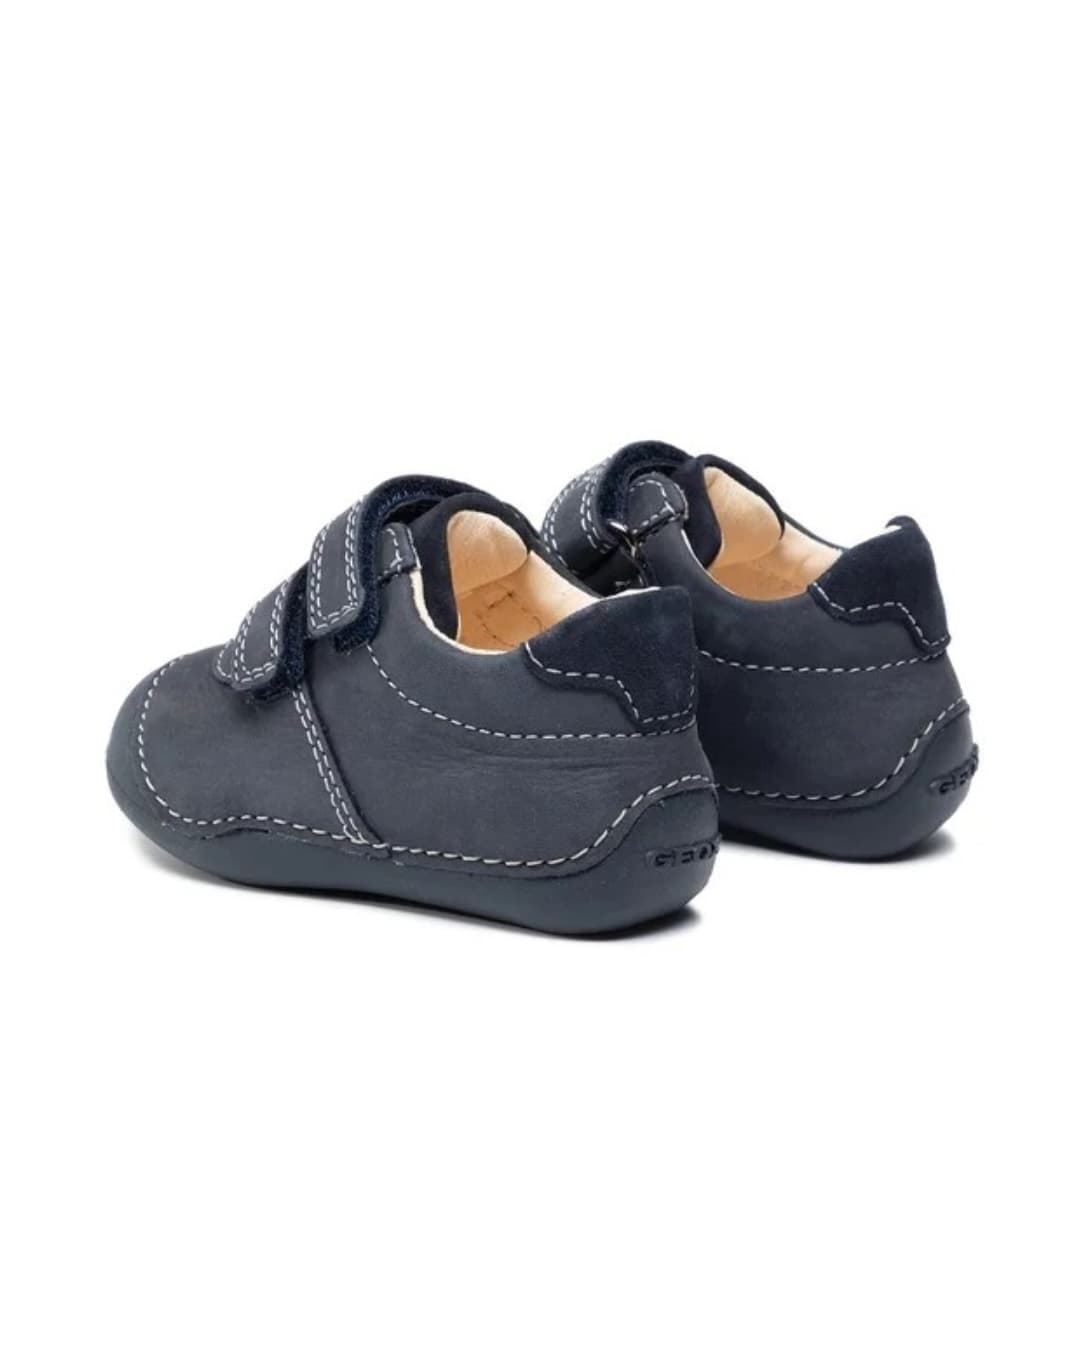 Geox Tutim Baby Respectful Shoe Navy Blue - Image 2